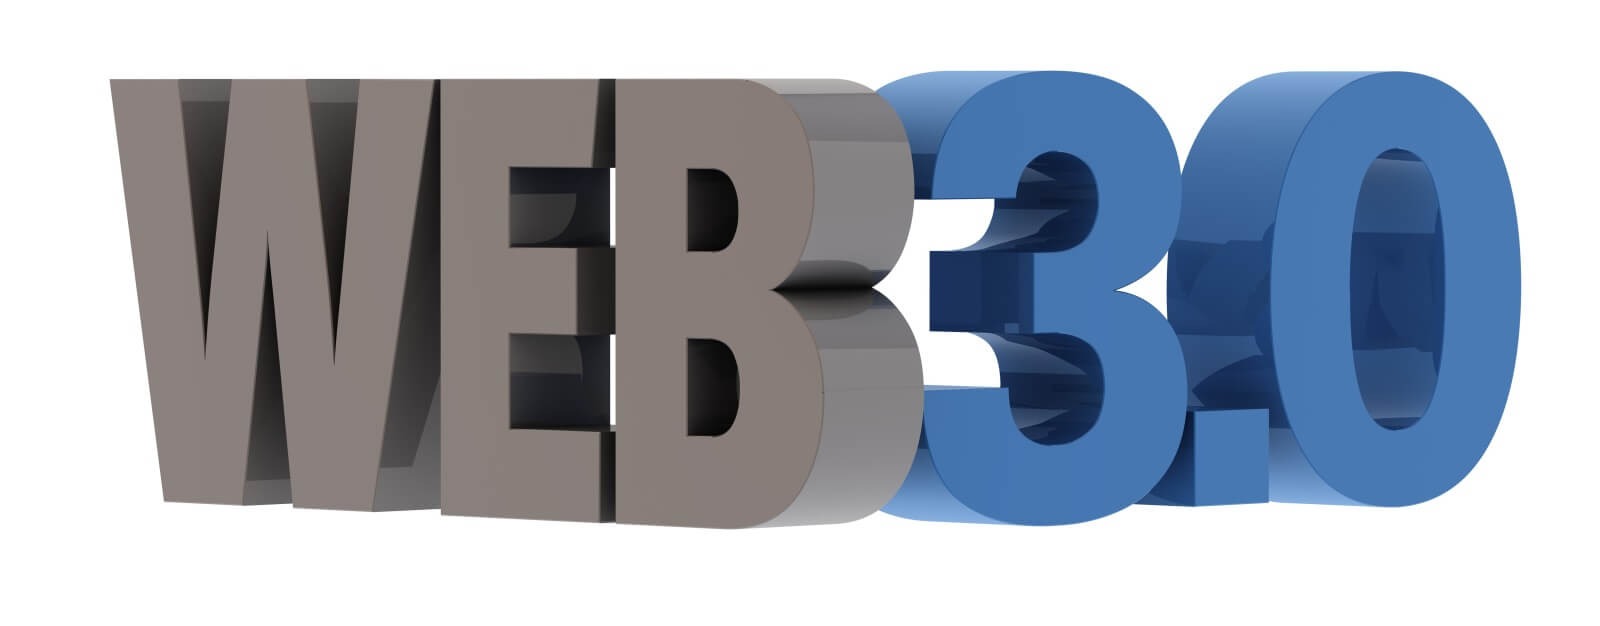 Web3 binance. Web3. Веб 3.0. Web3 картинка. Web3 логотип.